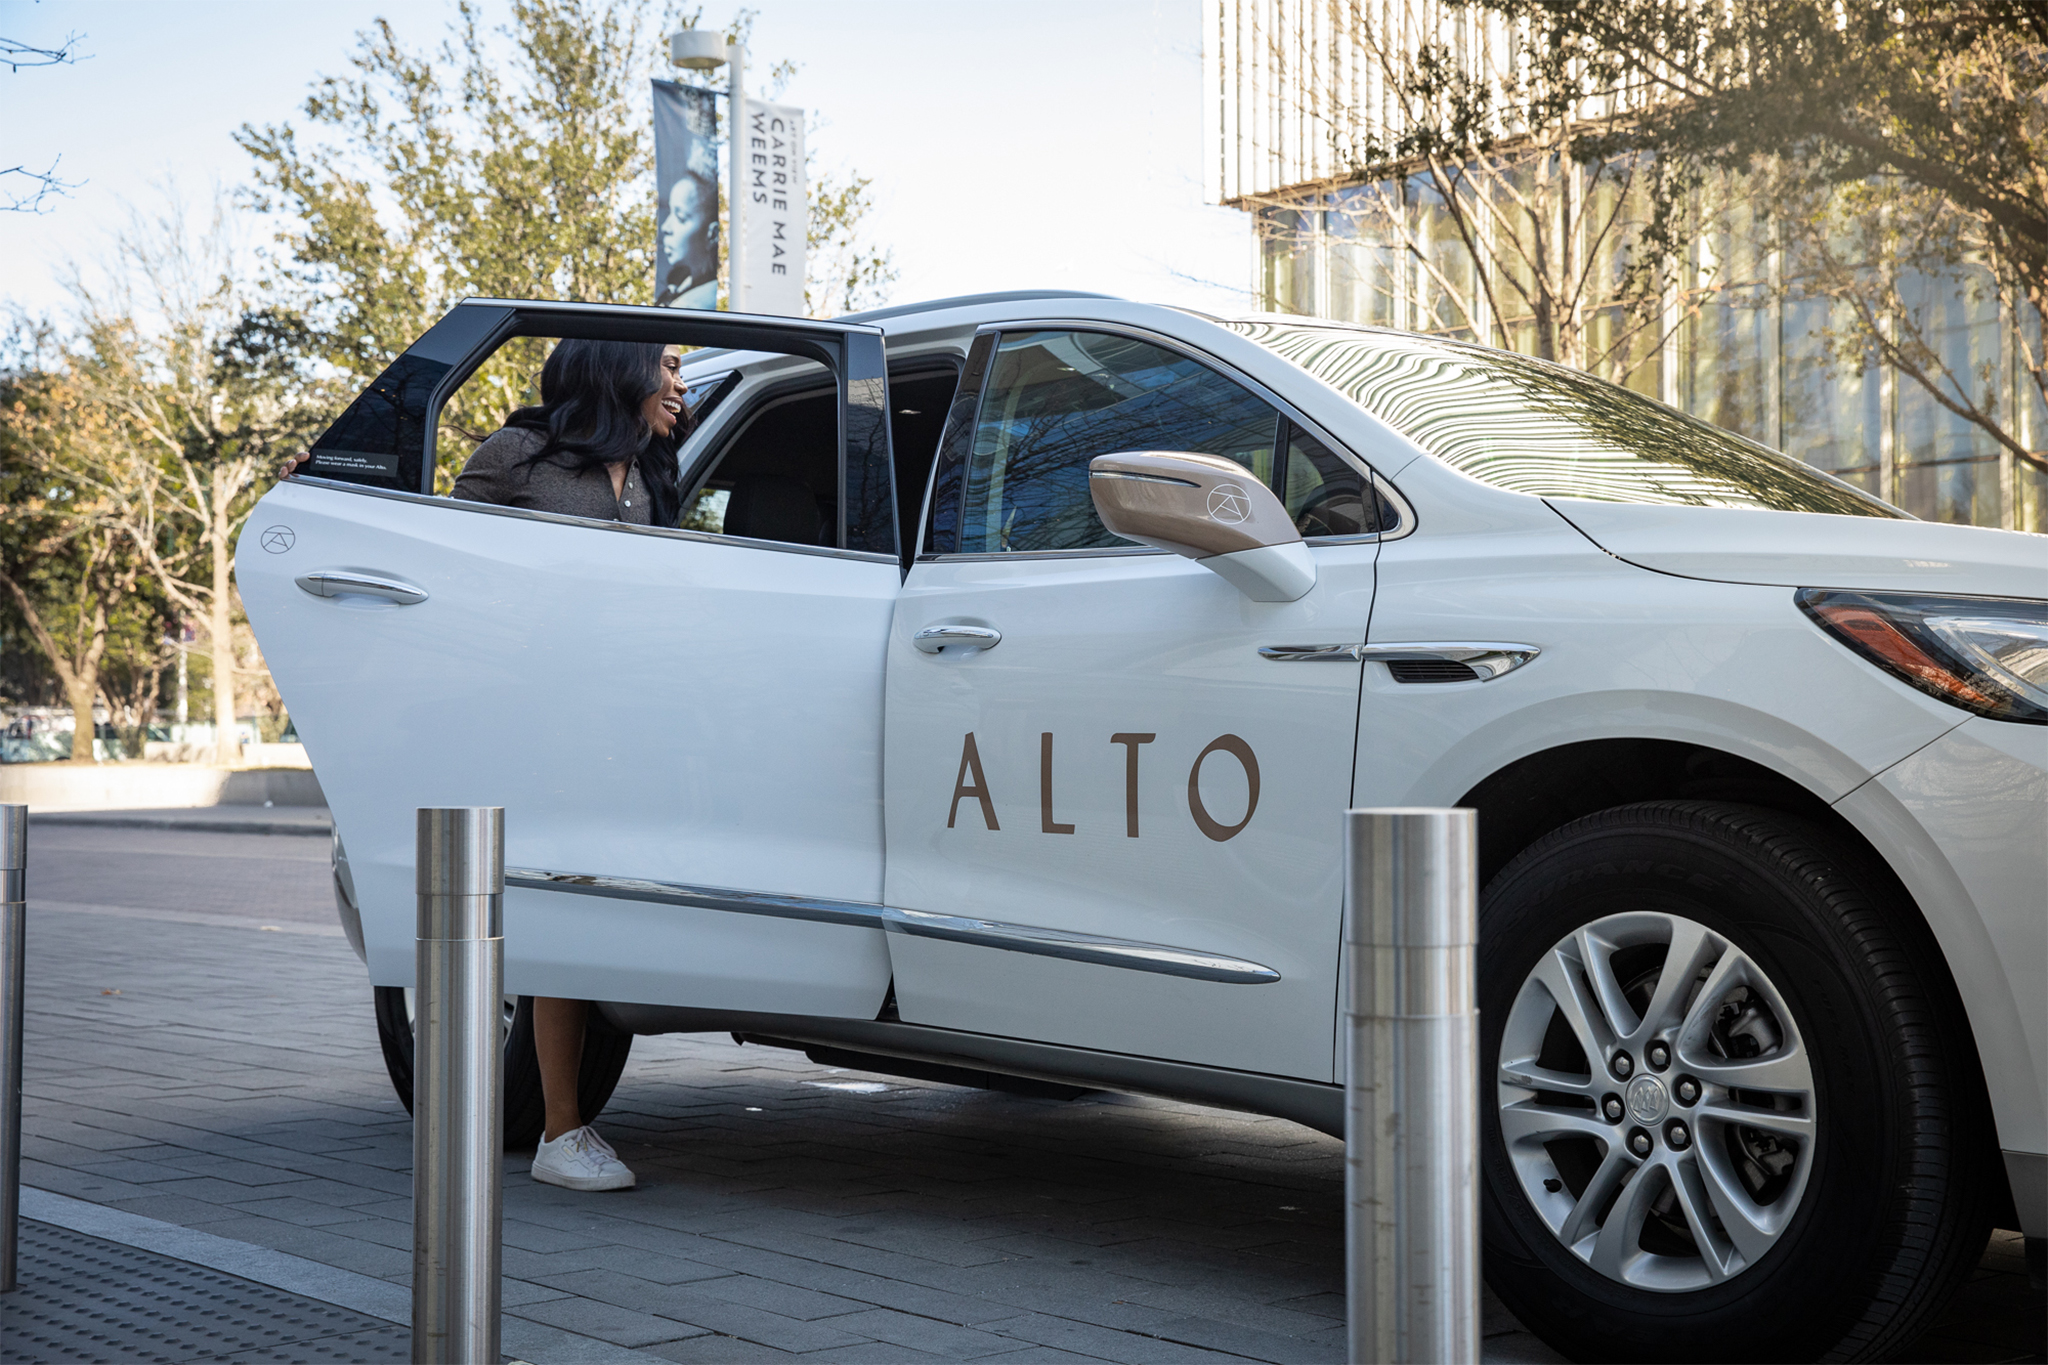 Rideshare company Alto plans a big Bay Area expansion